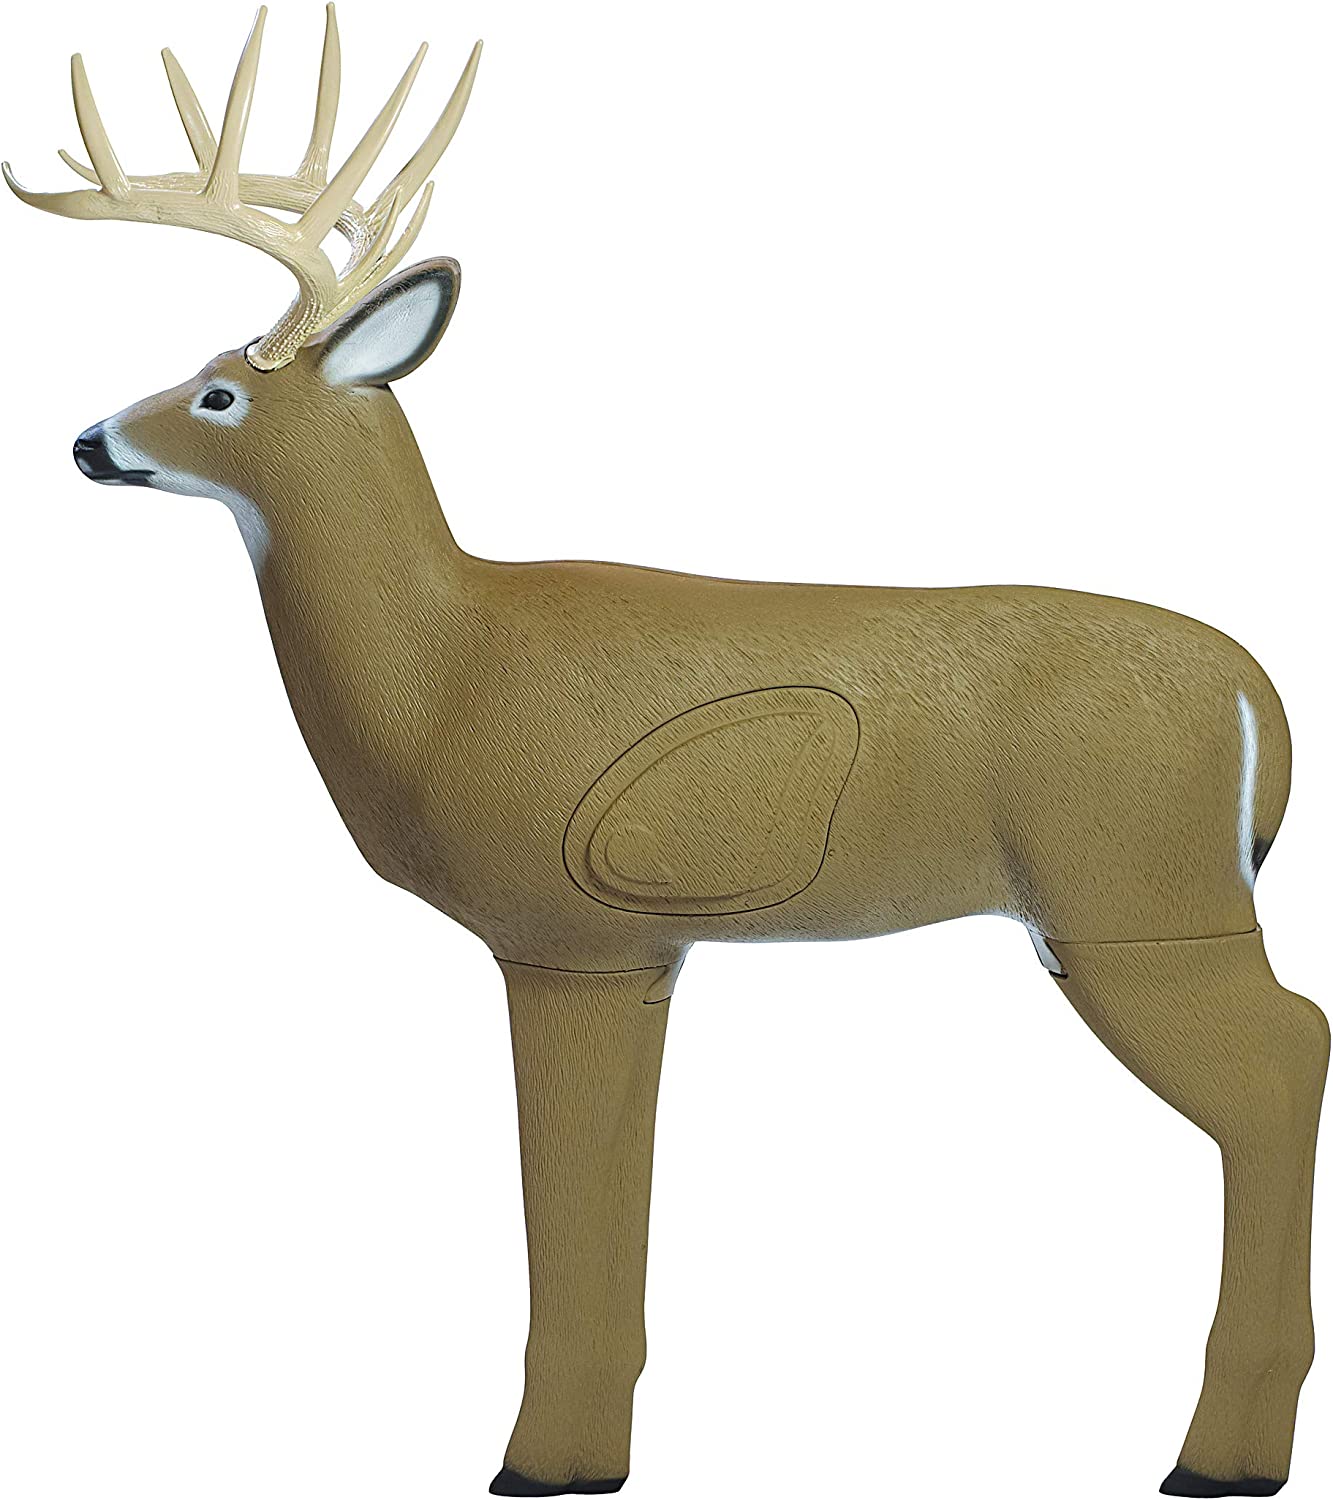 Photo of a realistic Field Logic Big Shooter 3D crossbow deer target.